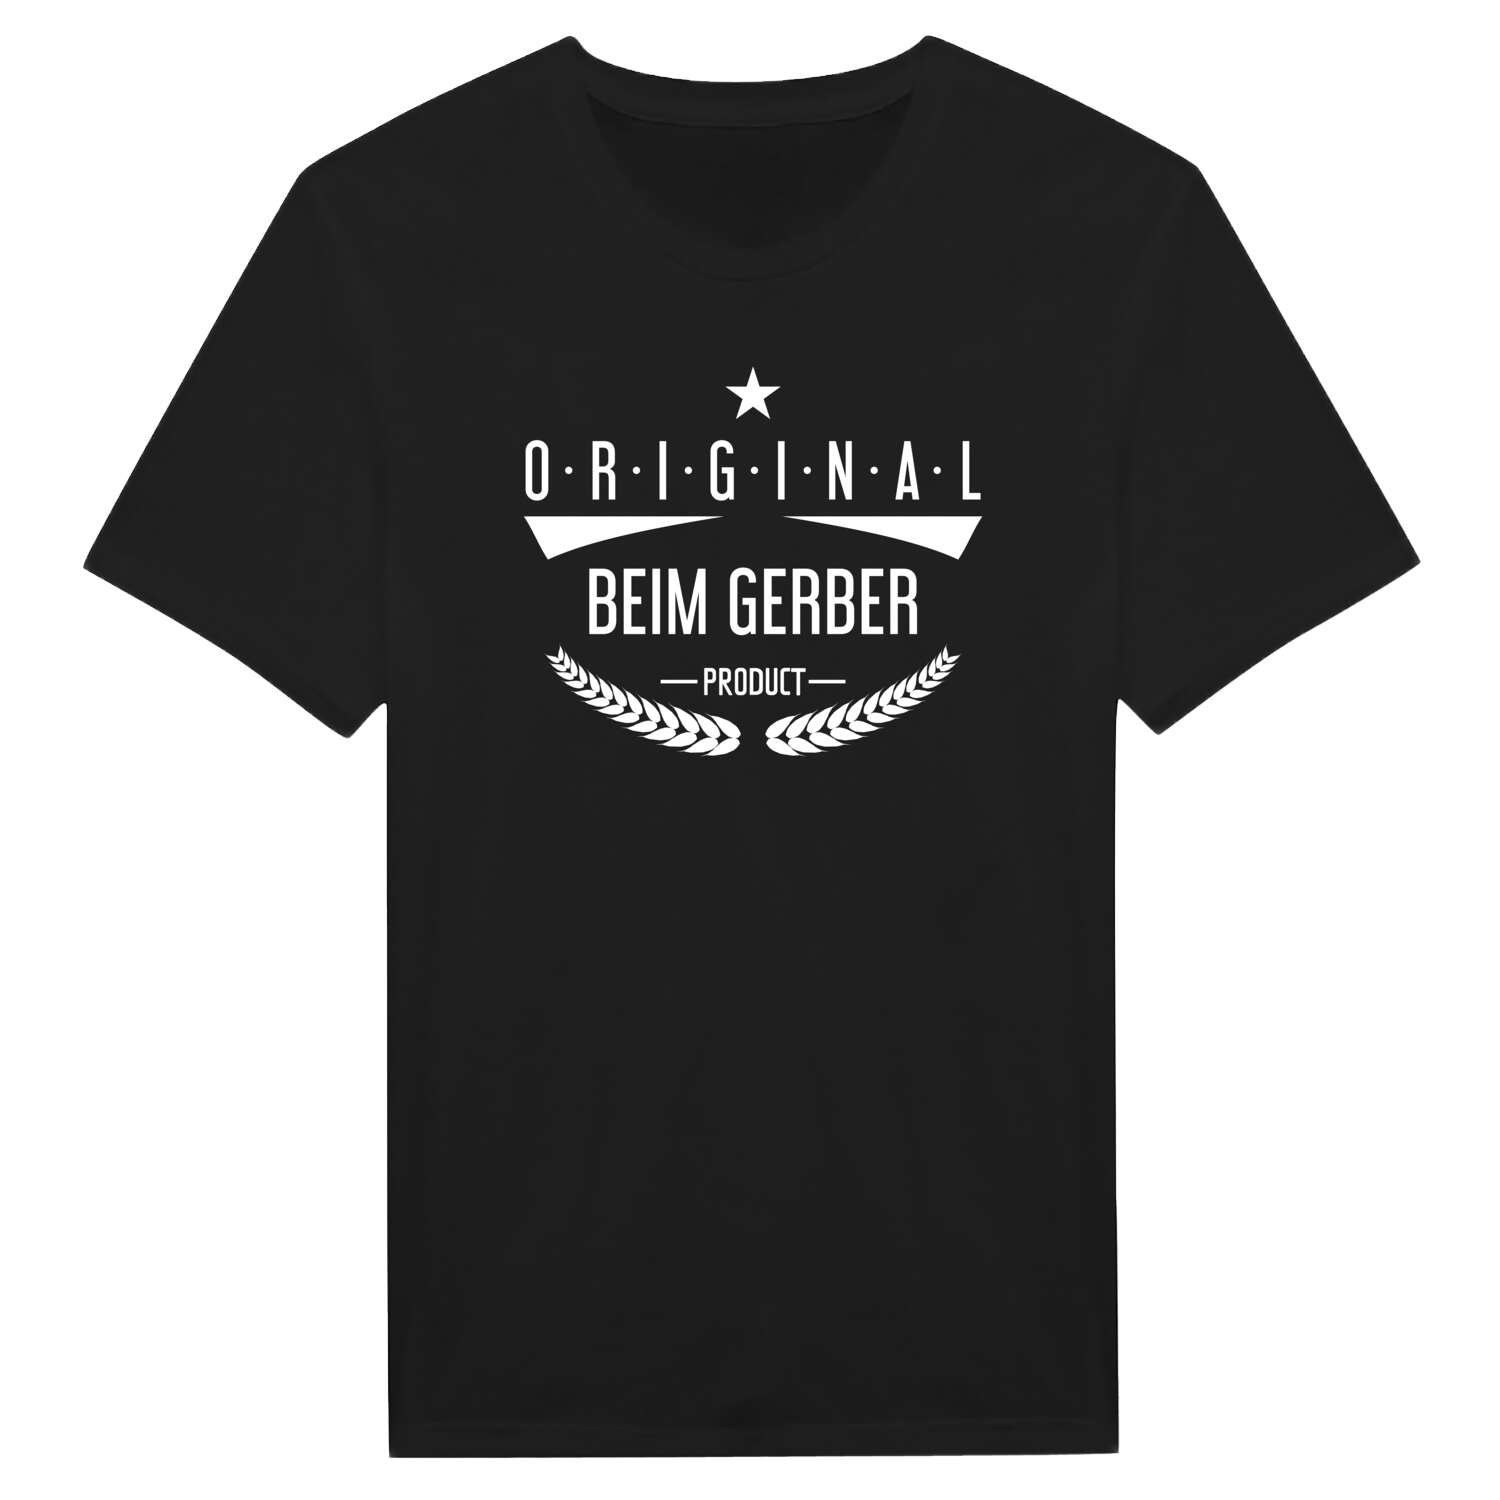 Beim Gerber T-Shirt »Original Product«